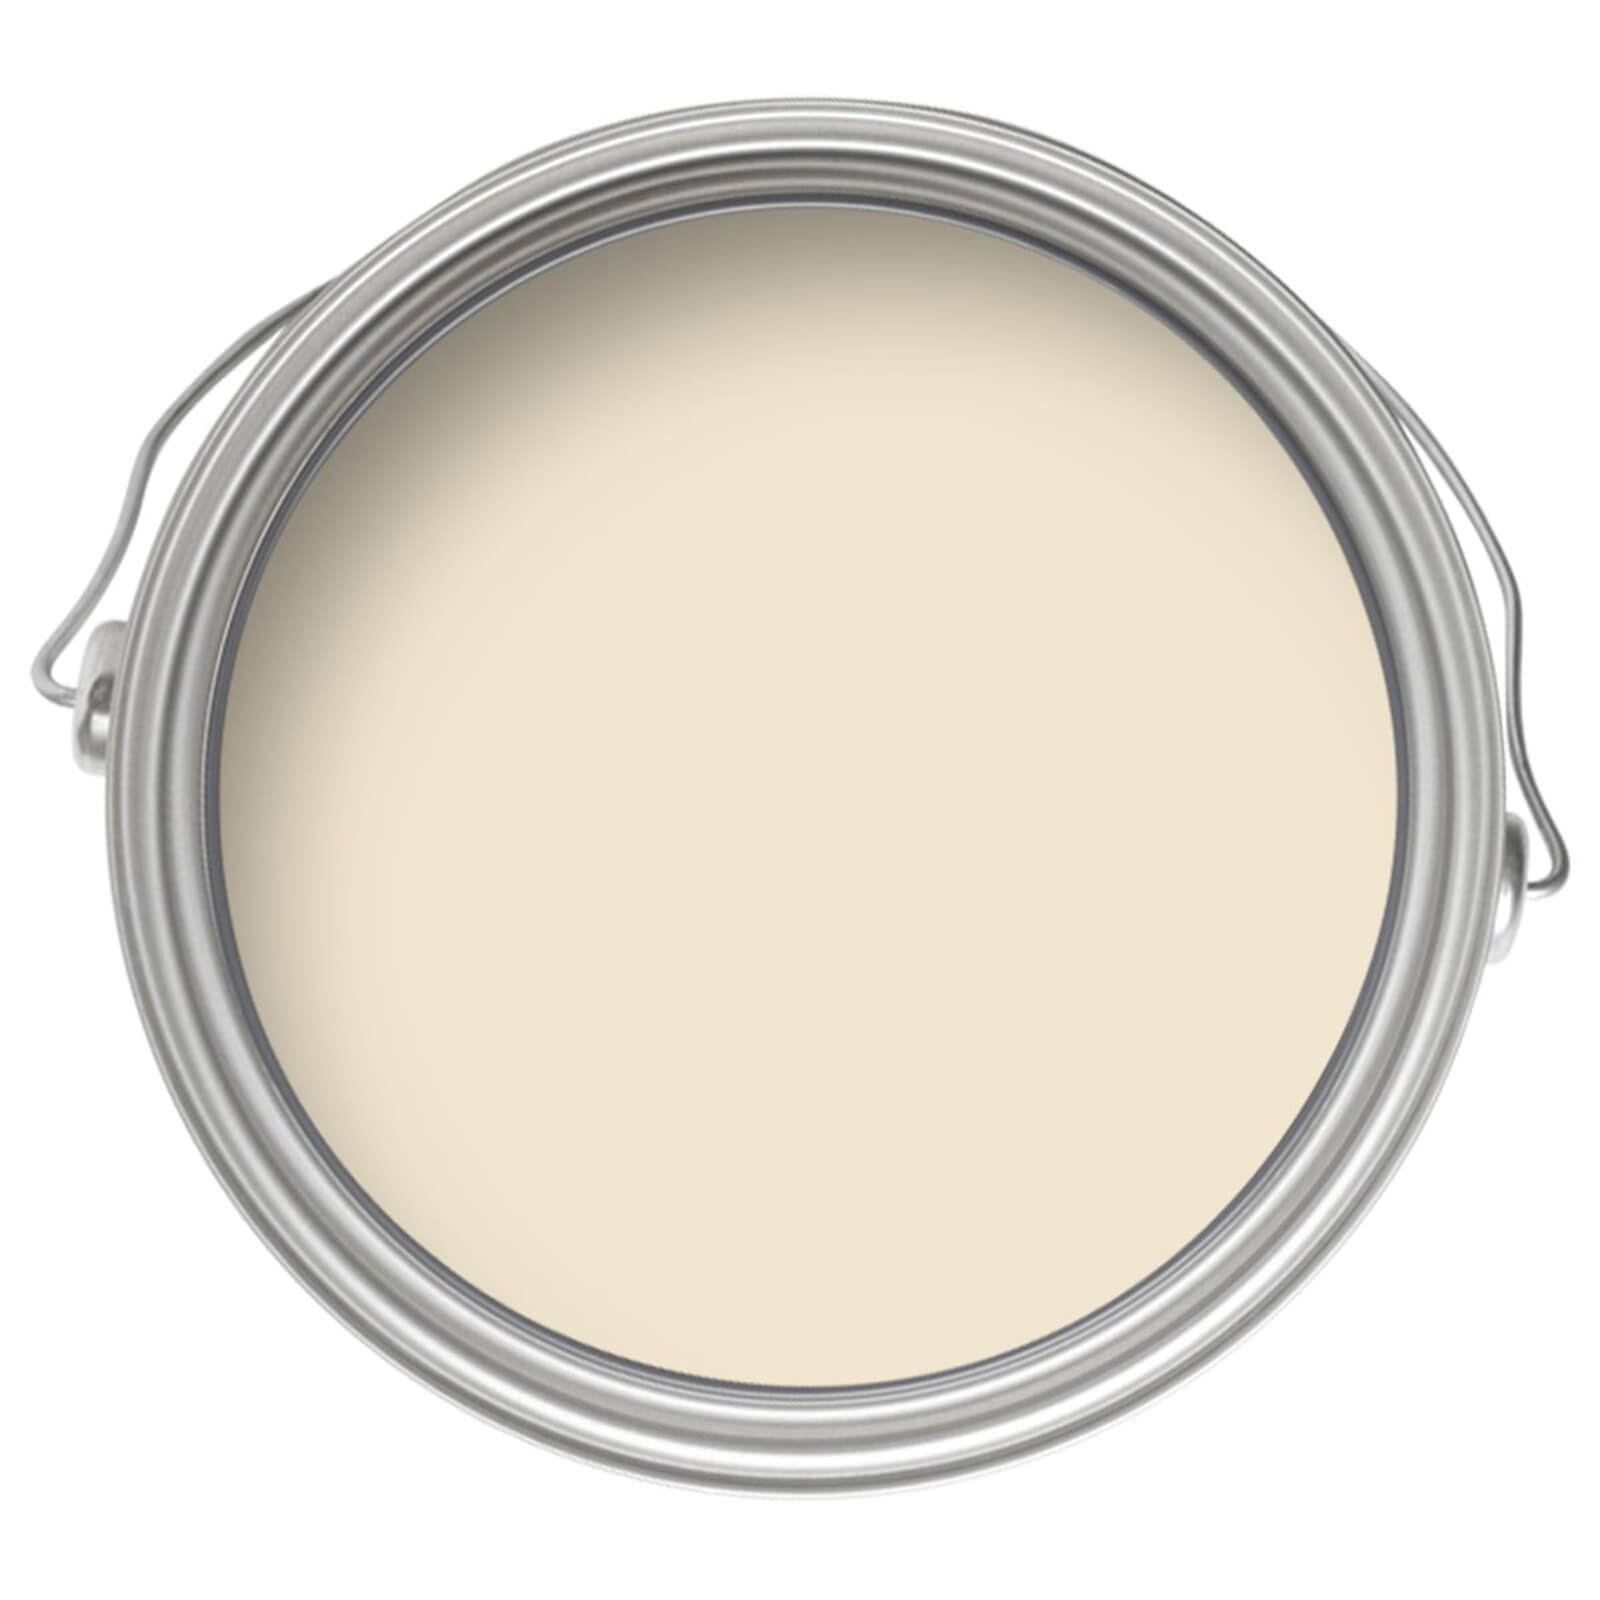 Crown Breatheasy Delicate Cream - Matt Emulsion Paint - 5L